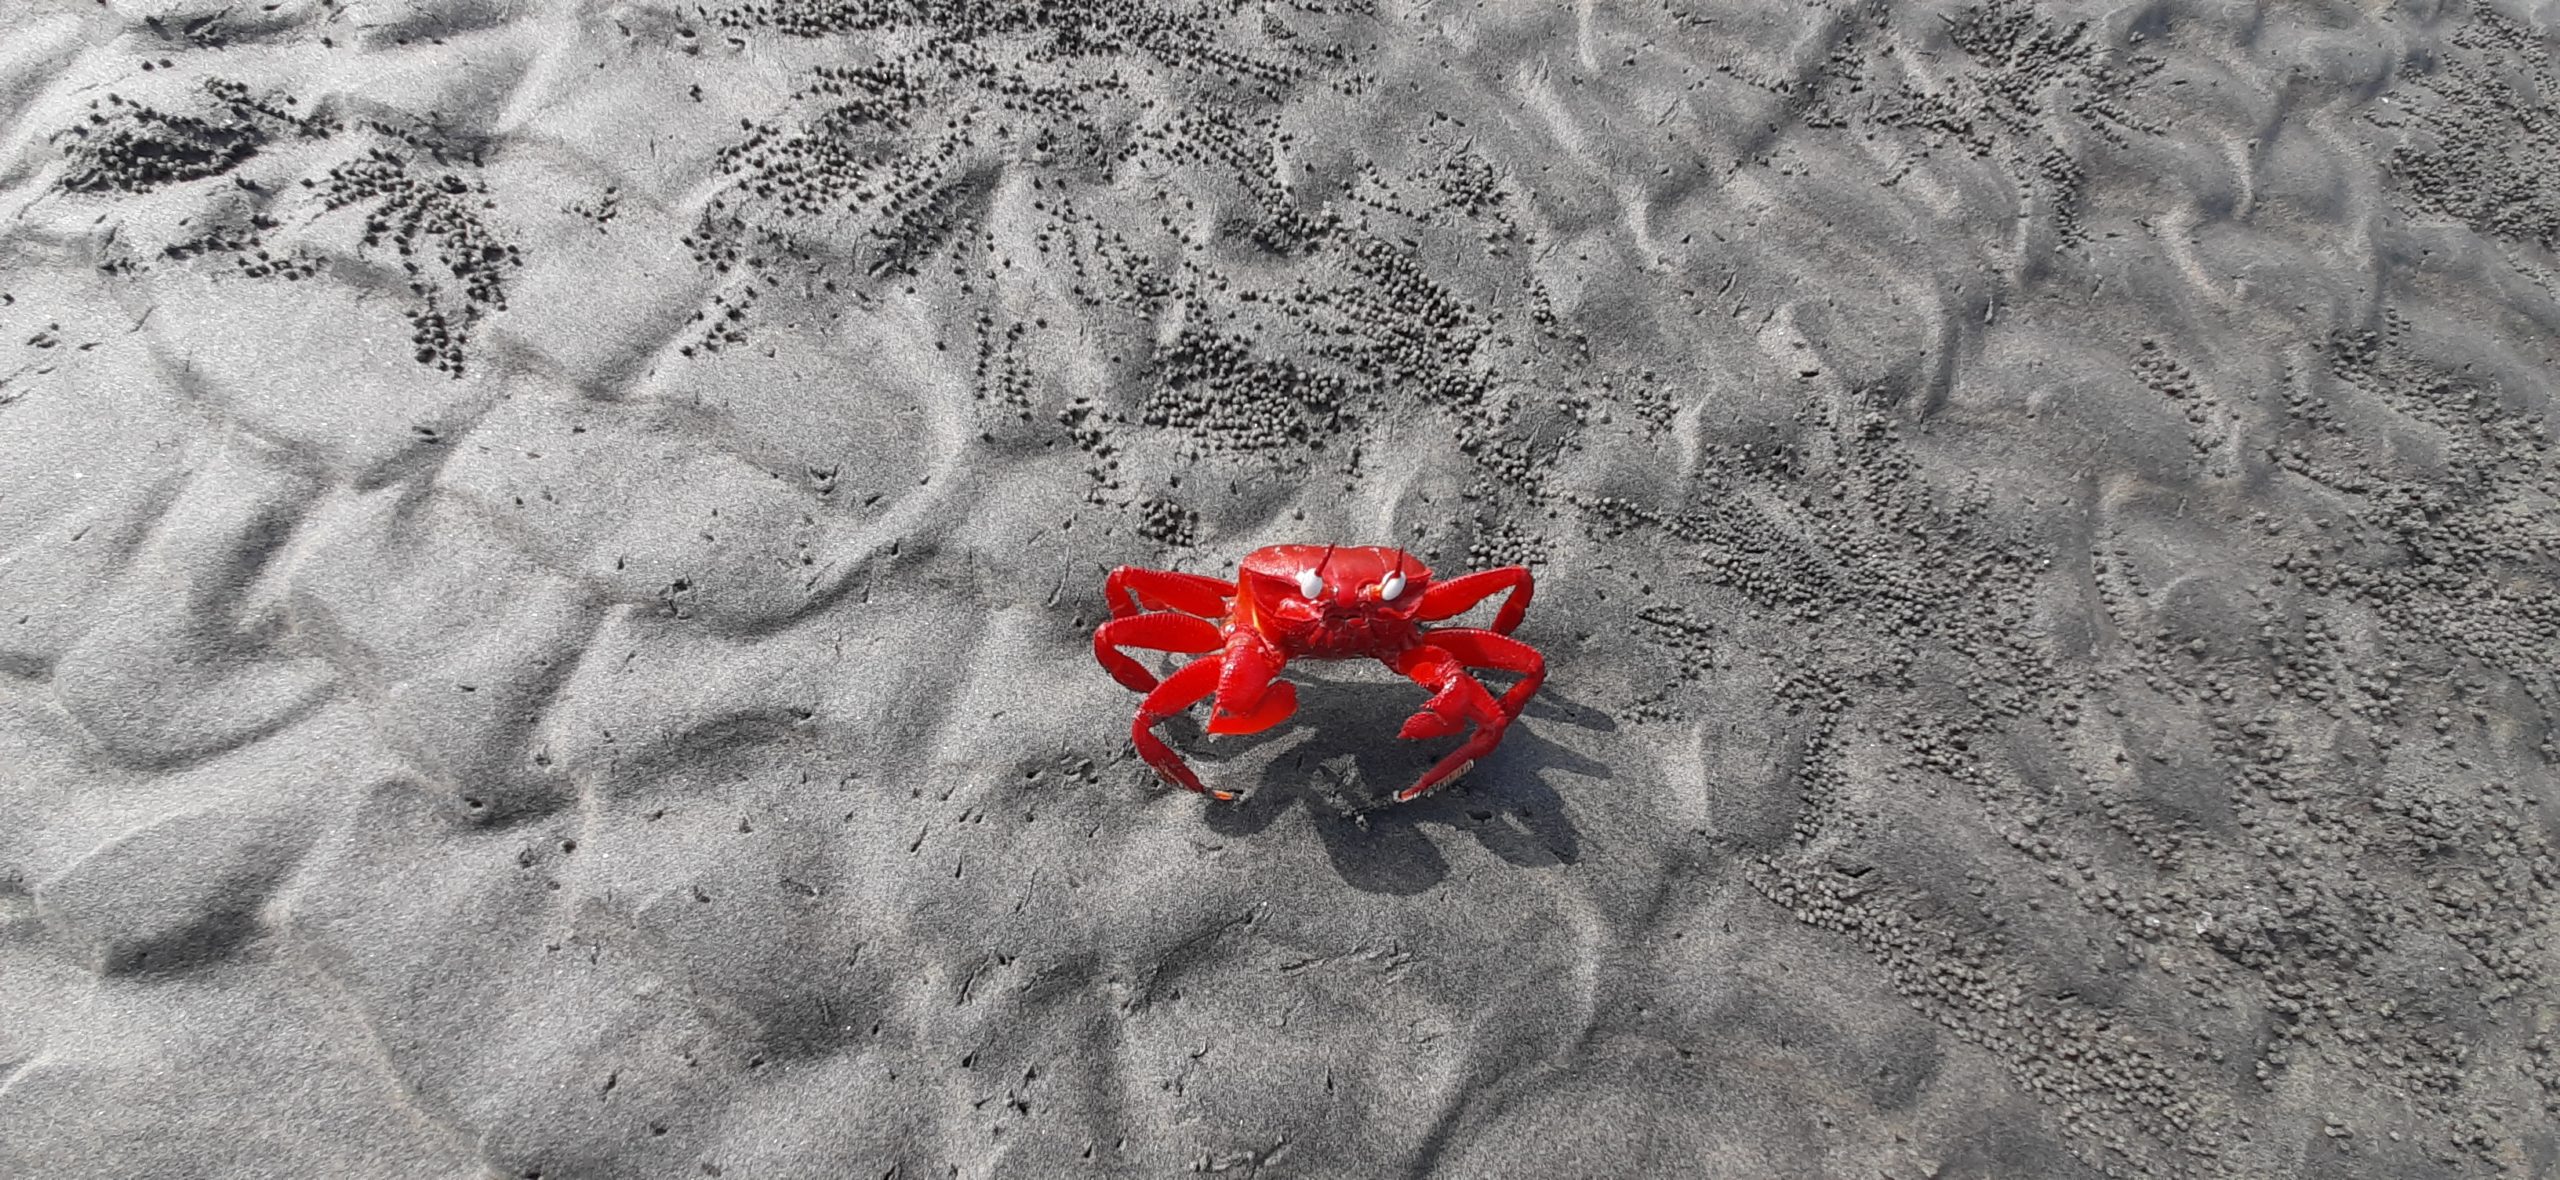 Red Crab Clicked By Humayan Kabir 